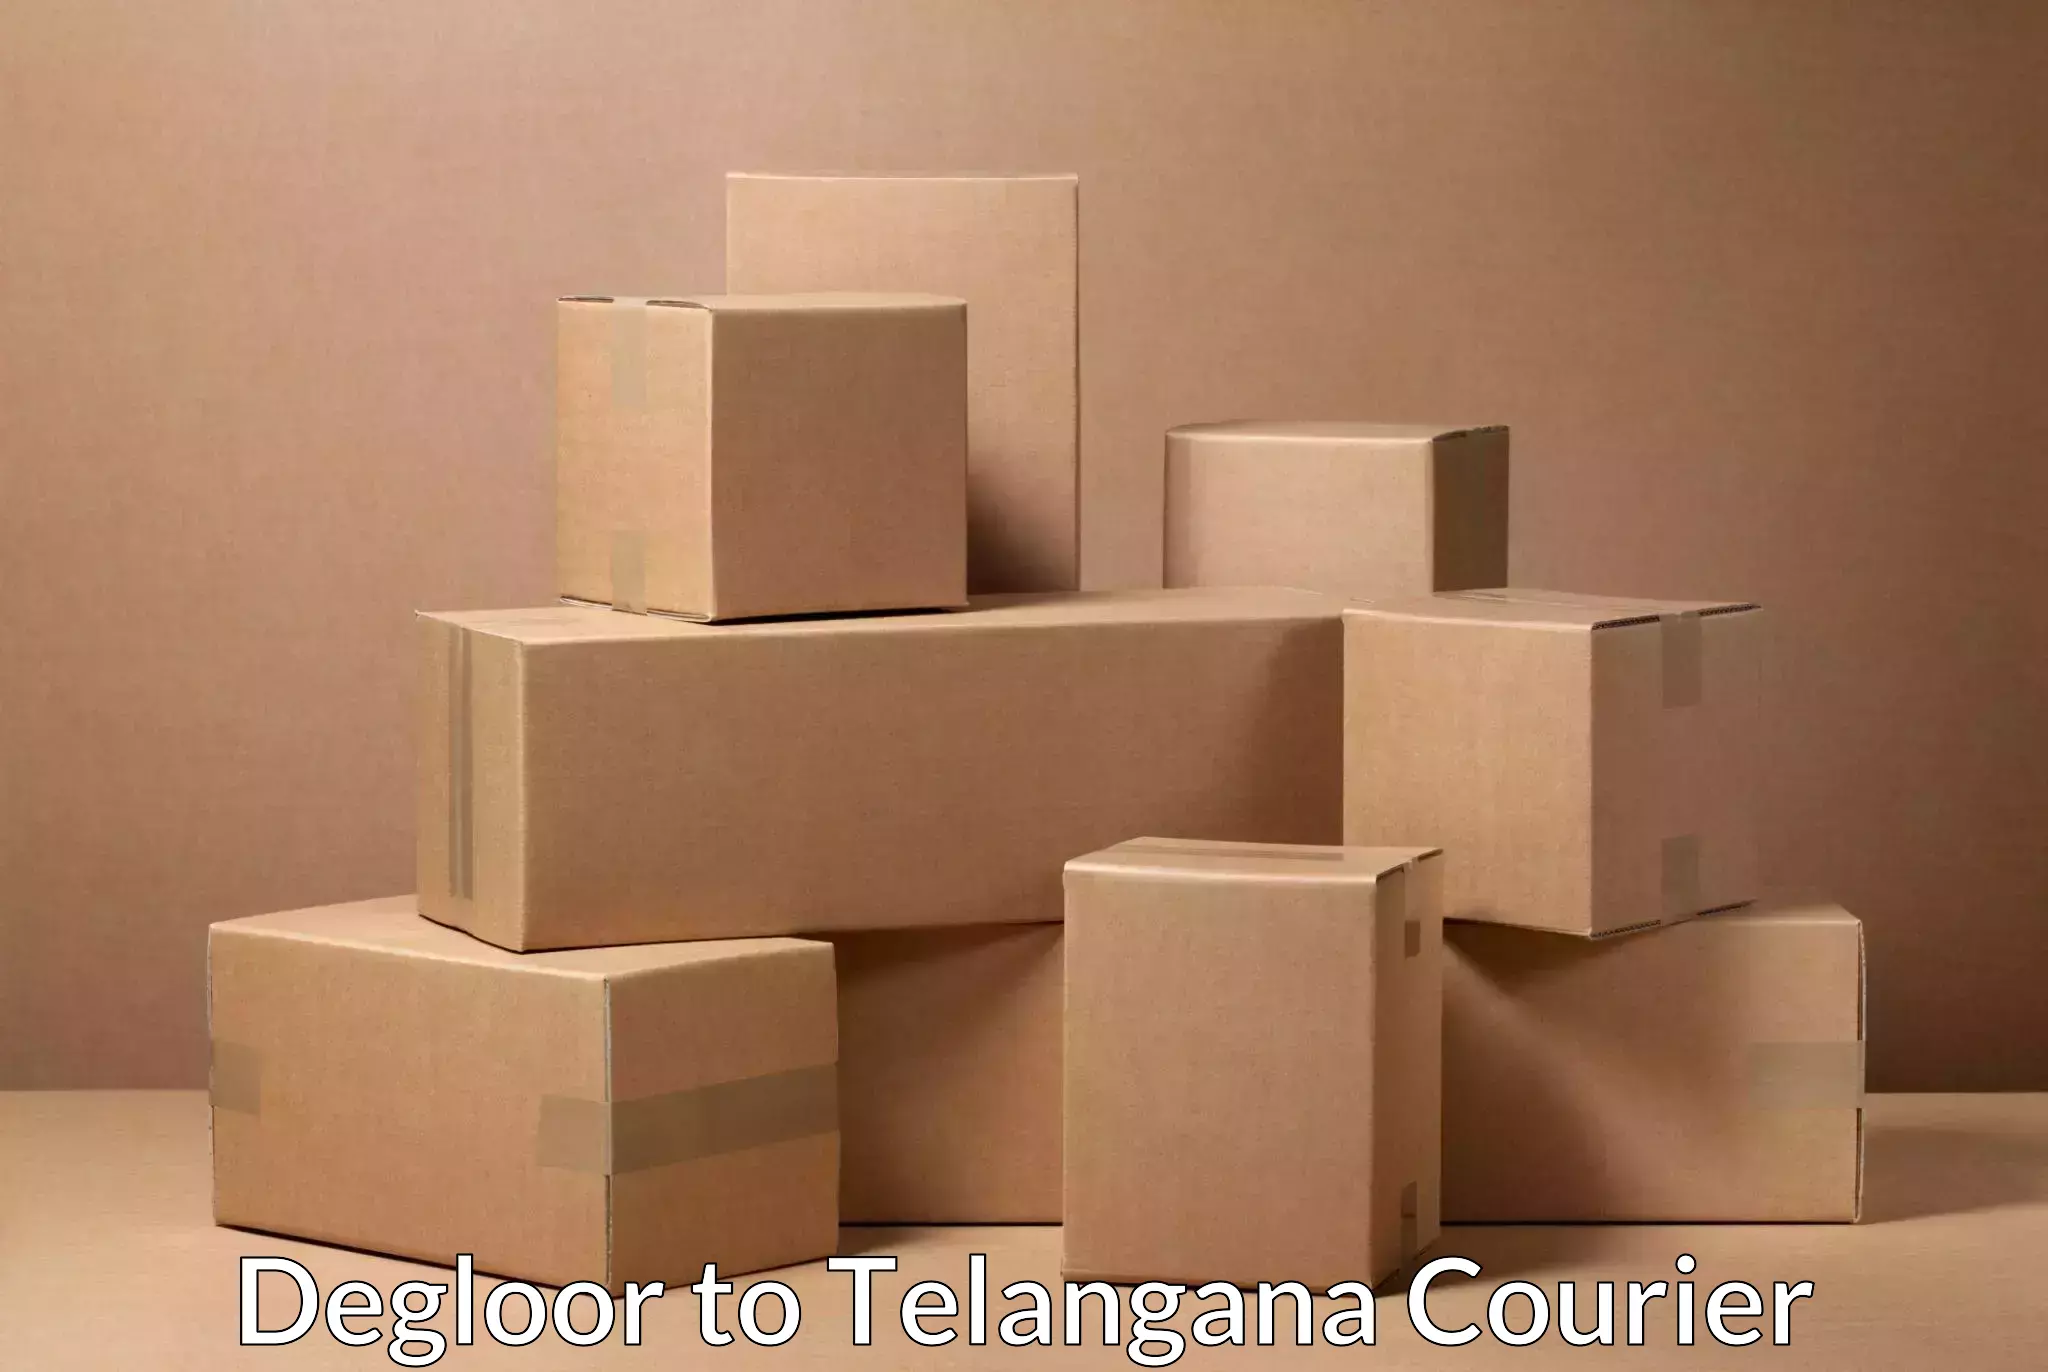 Cargo delivery service Degloor to Telangana